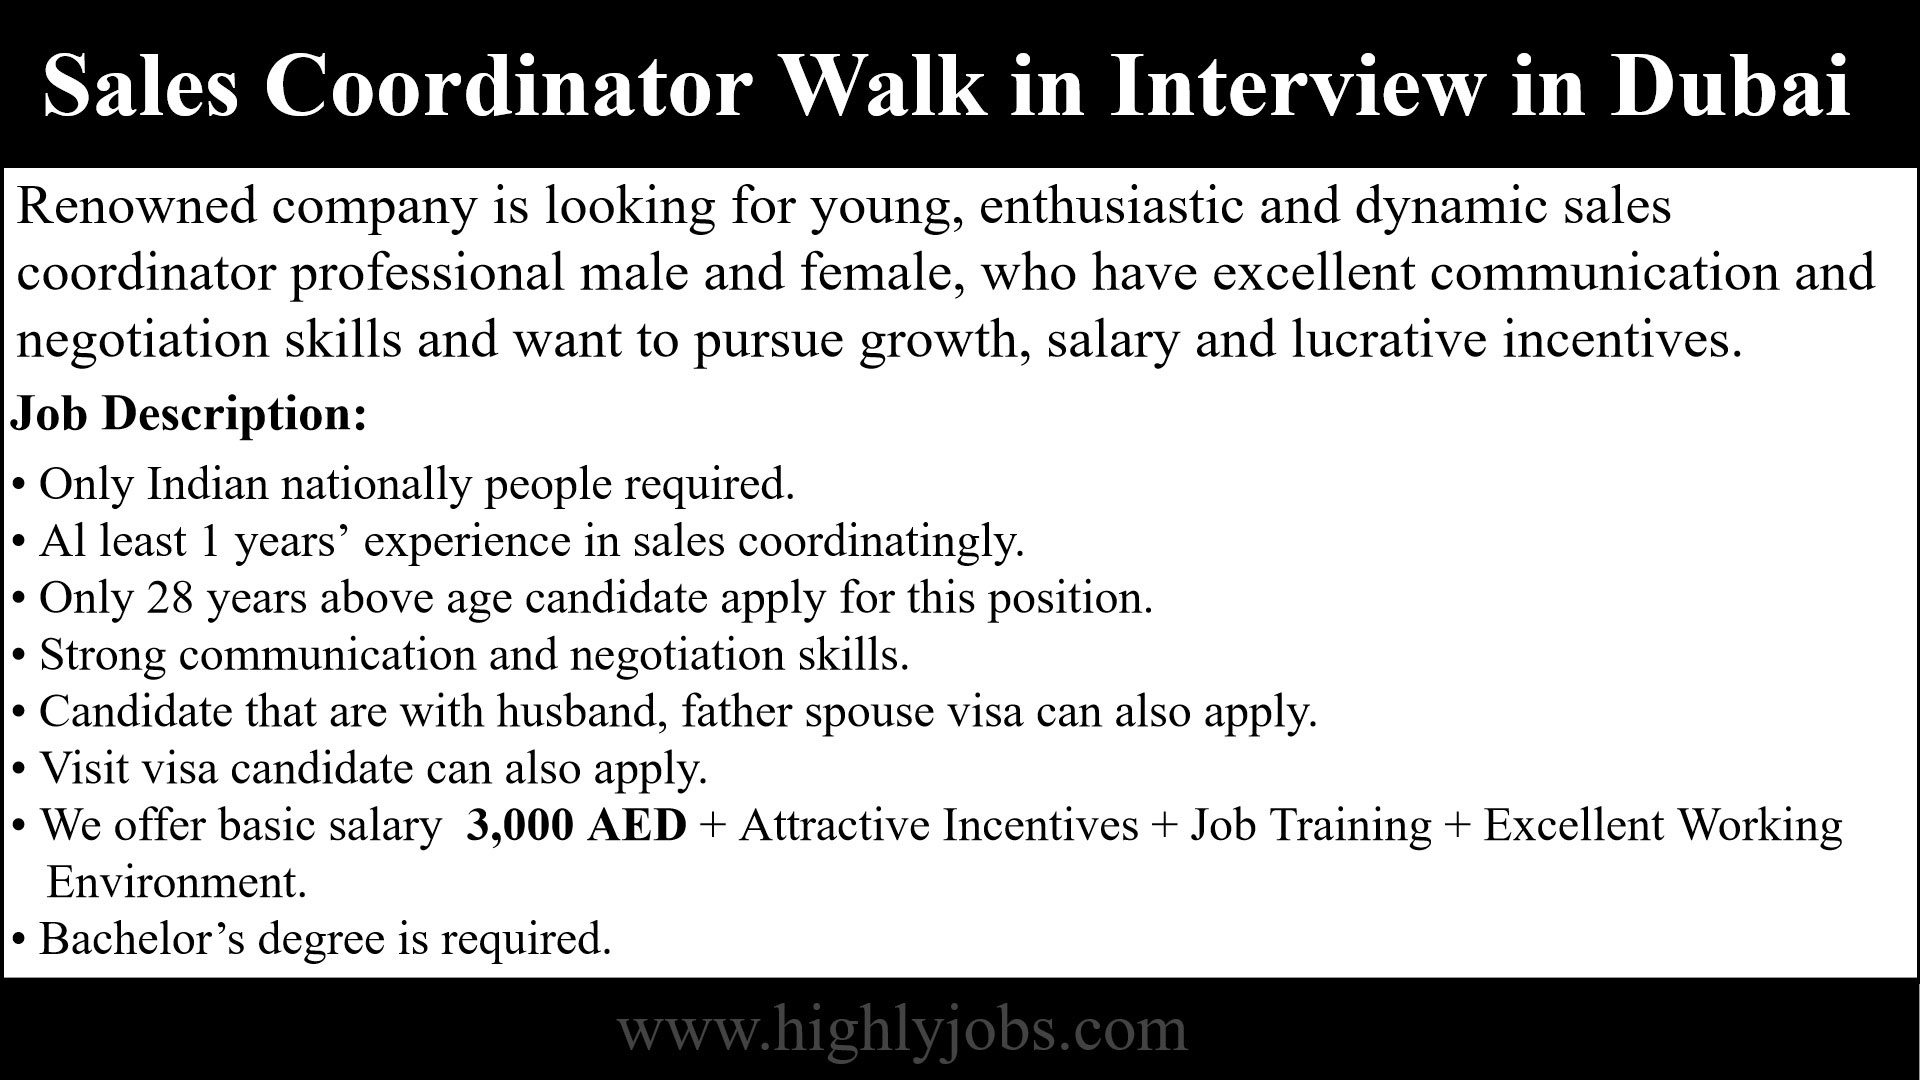 Sales Coordinator Walk in Interview in Dubai - UAE